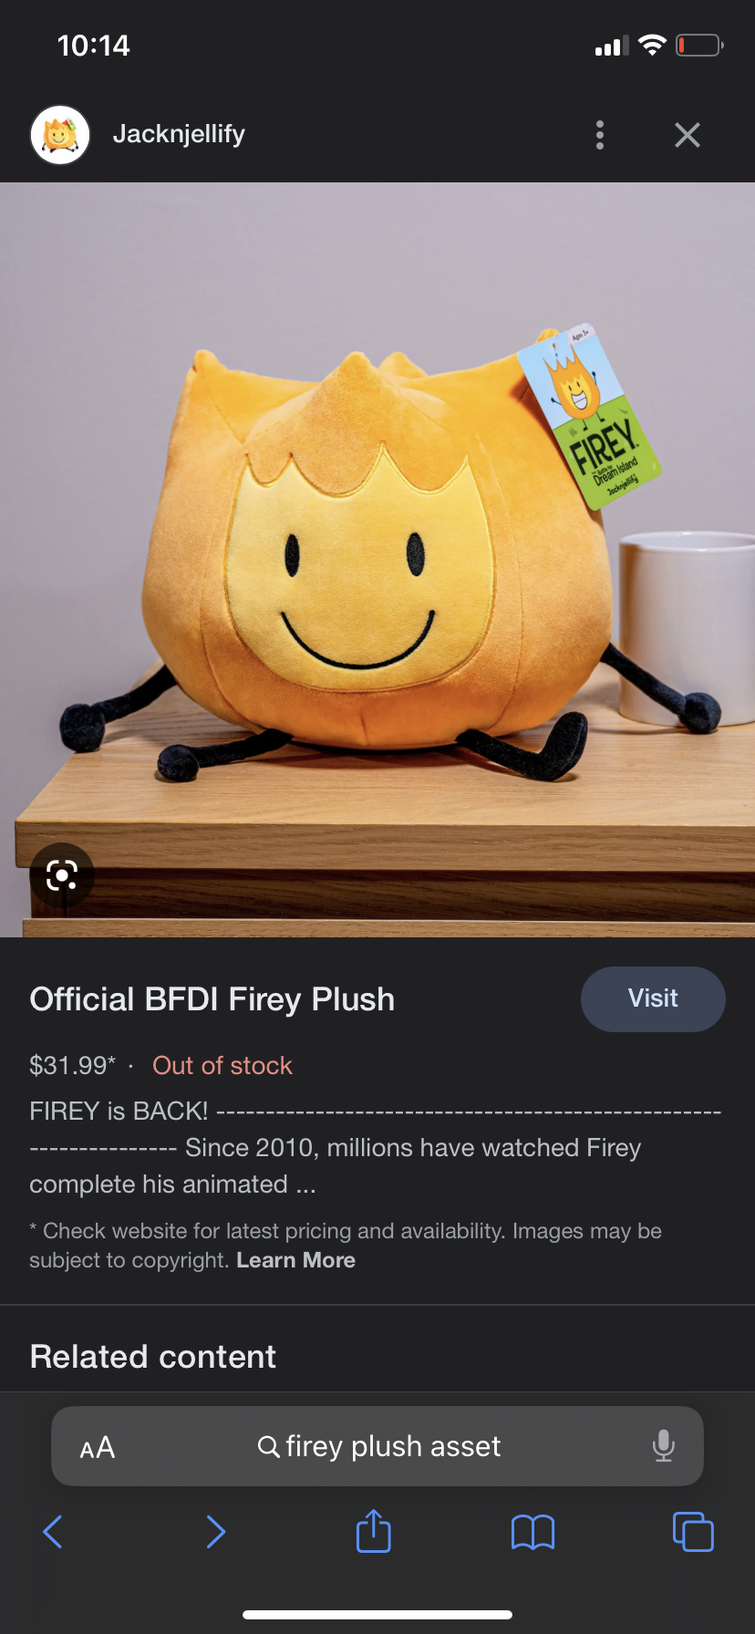 Official BFDI Firey Plush – Jacknjellify